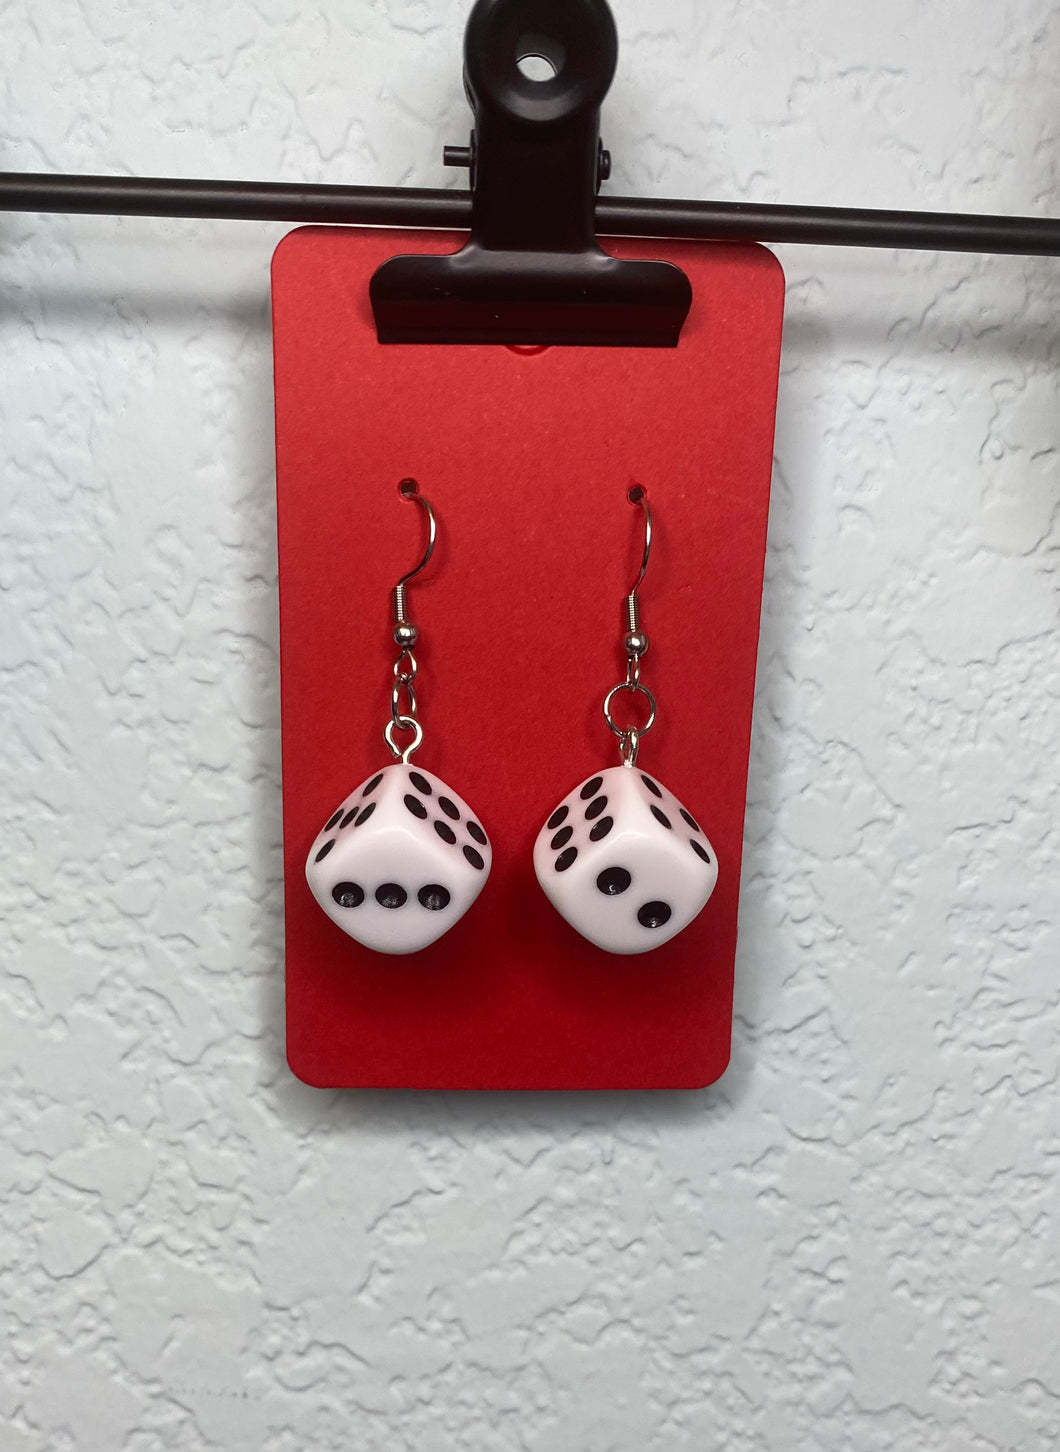 White dice earrings